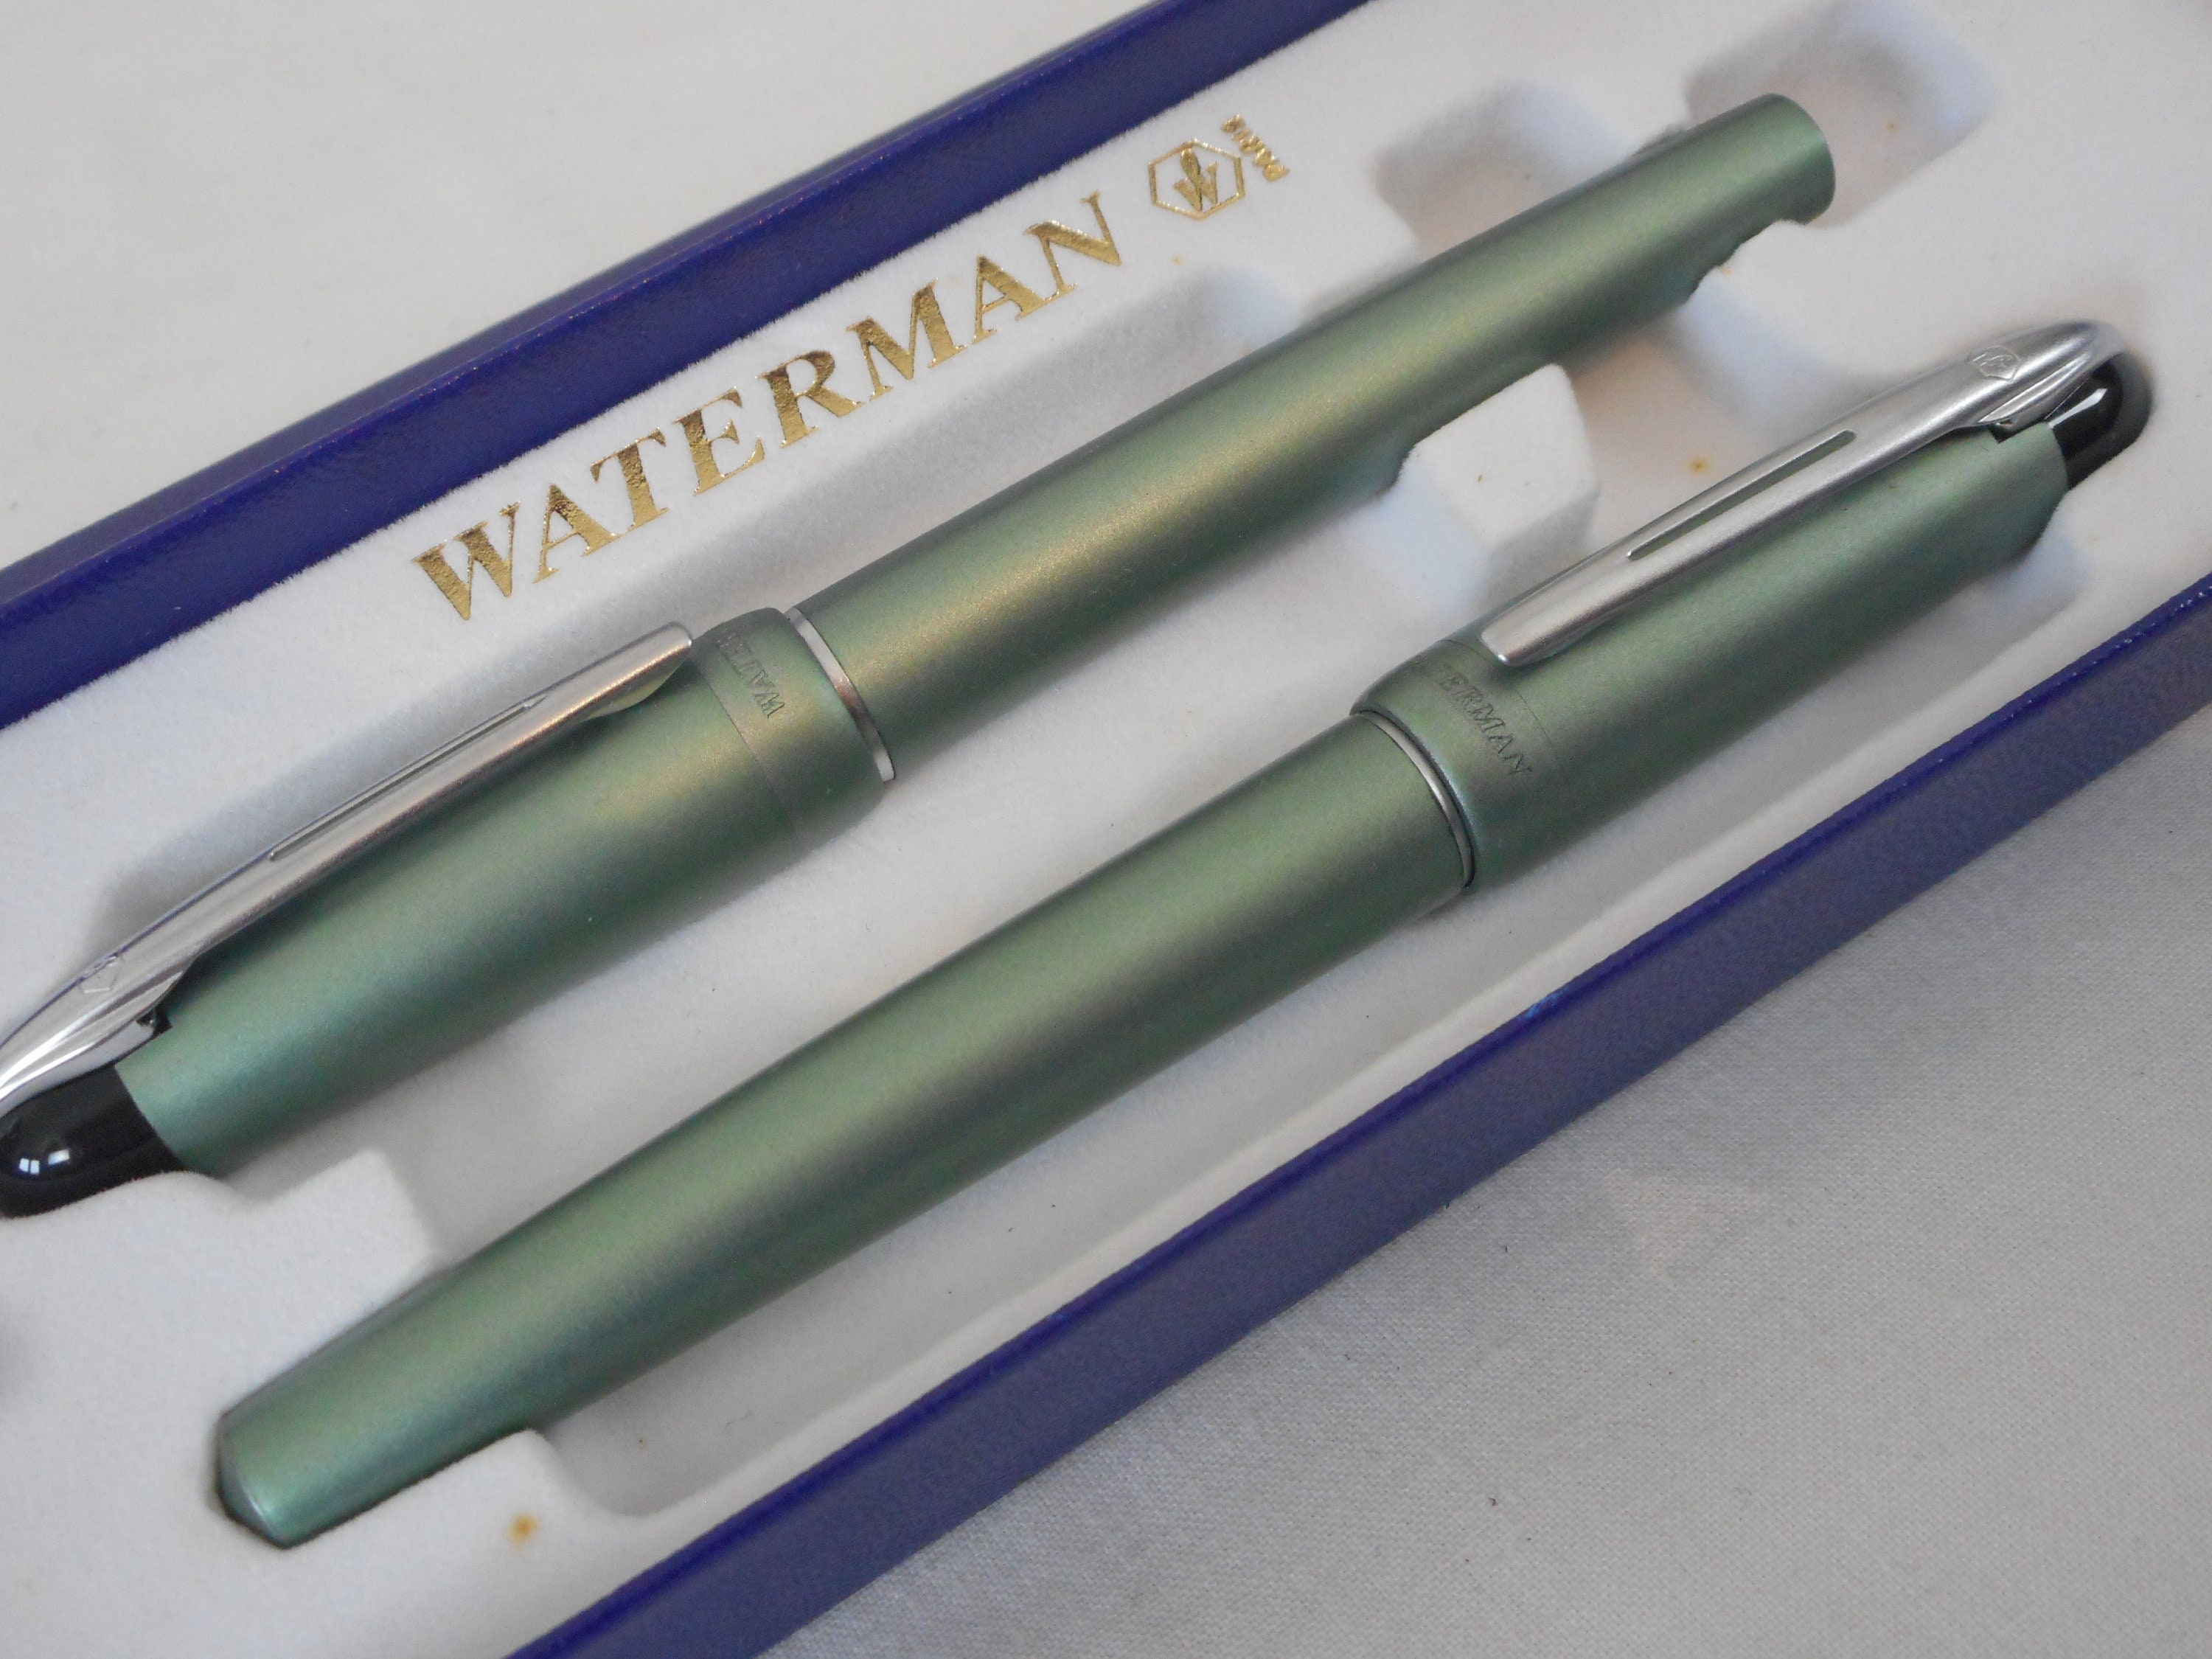 Waterman SIngle Pen Acrylic Display--1-1/2 inches tall 